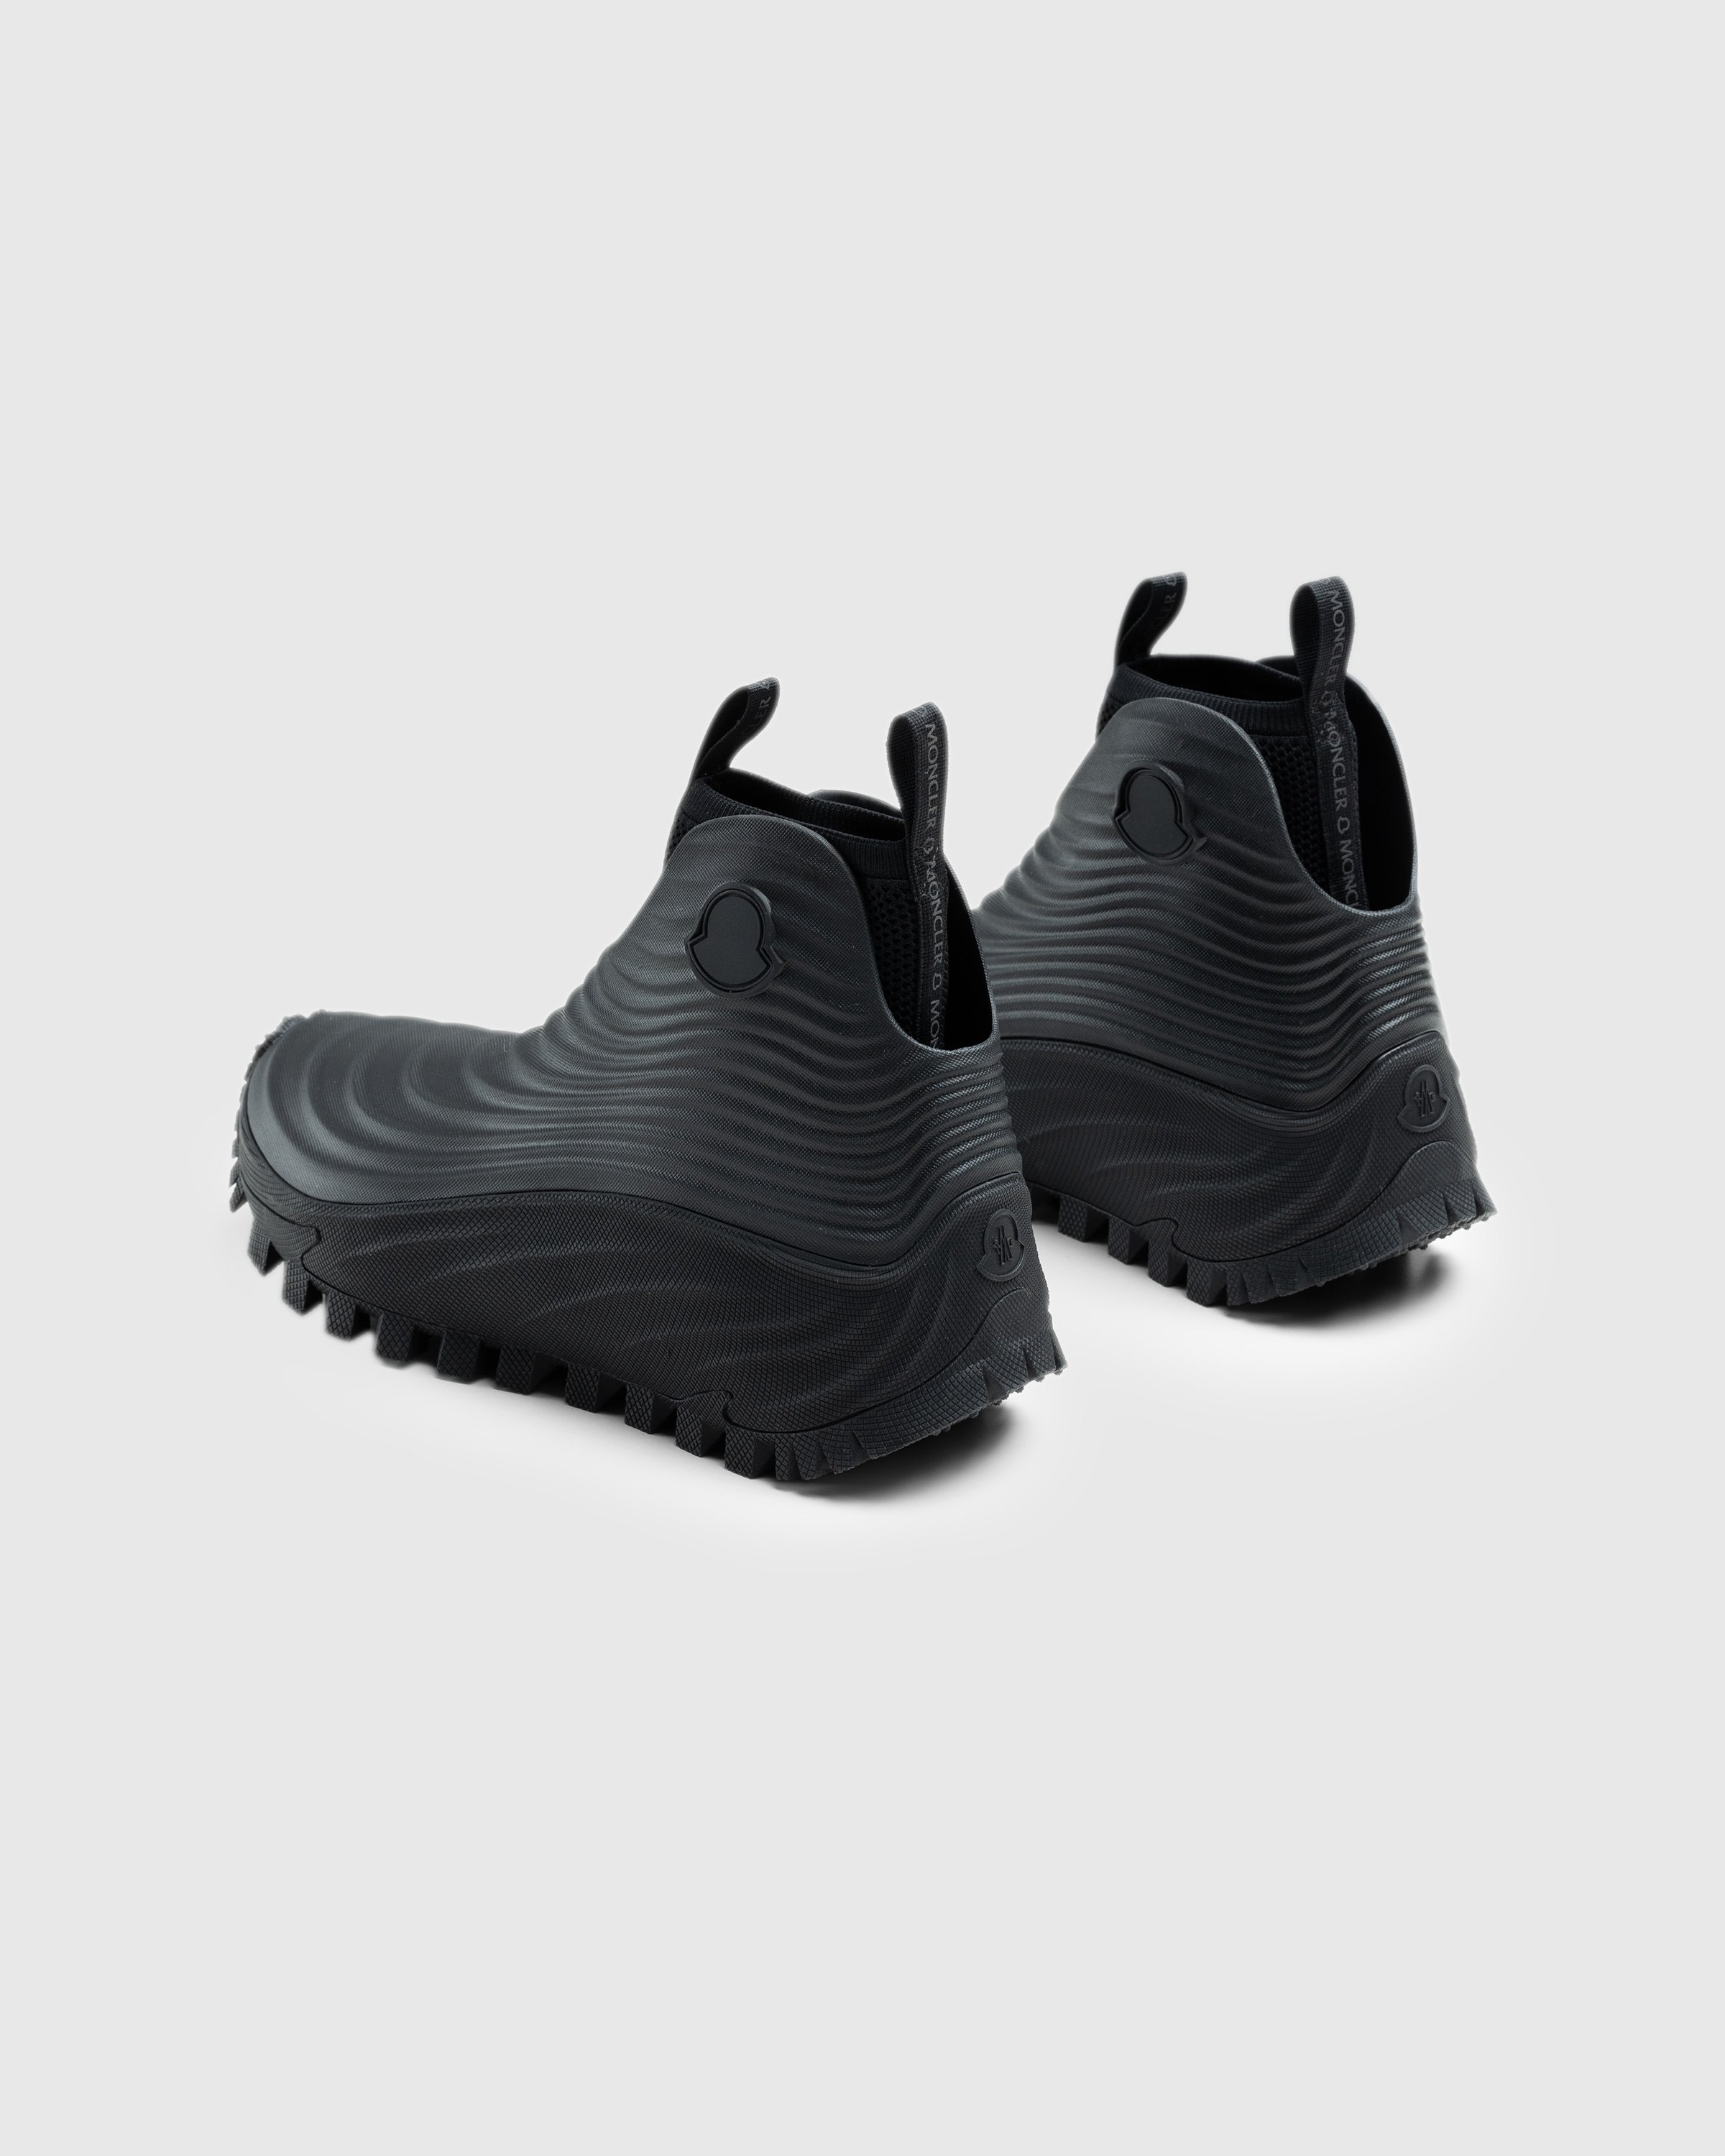 Moncler - Acqua High Rain Boots Black - Footwear - Black - Image 4